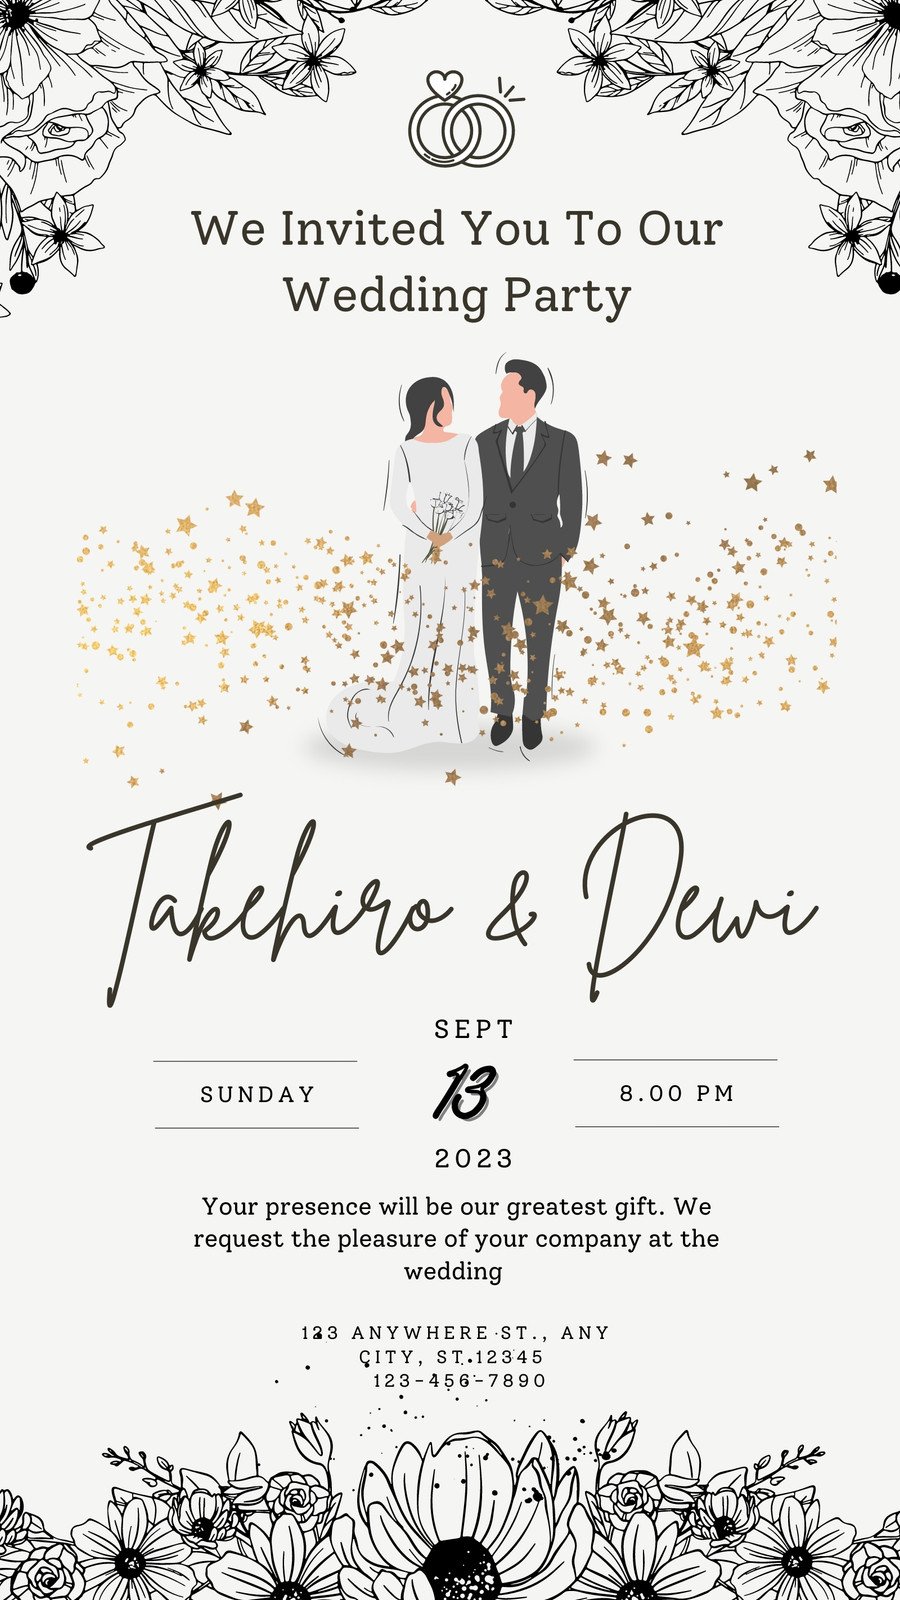 Handmade Wedding Invitations: 21 Designs That Every Couple Will